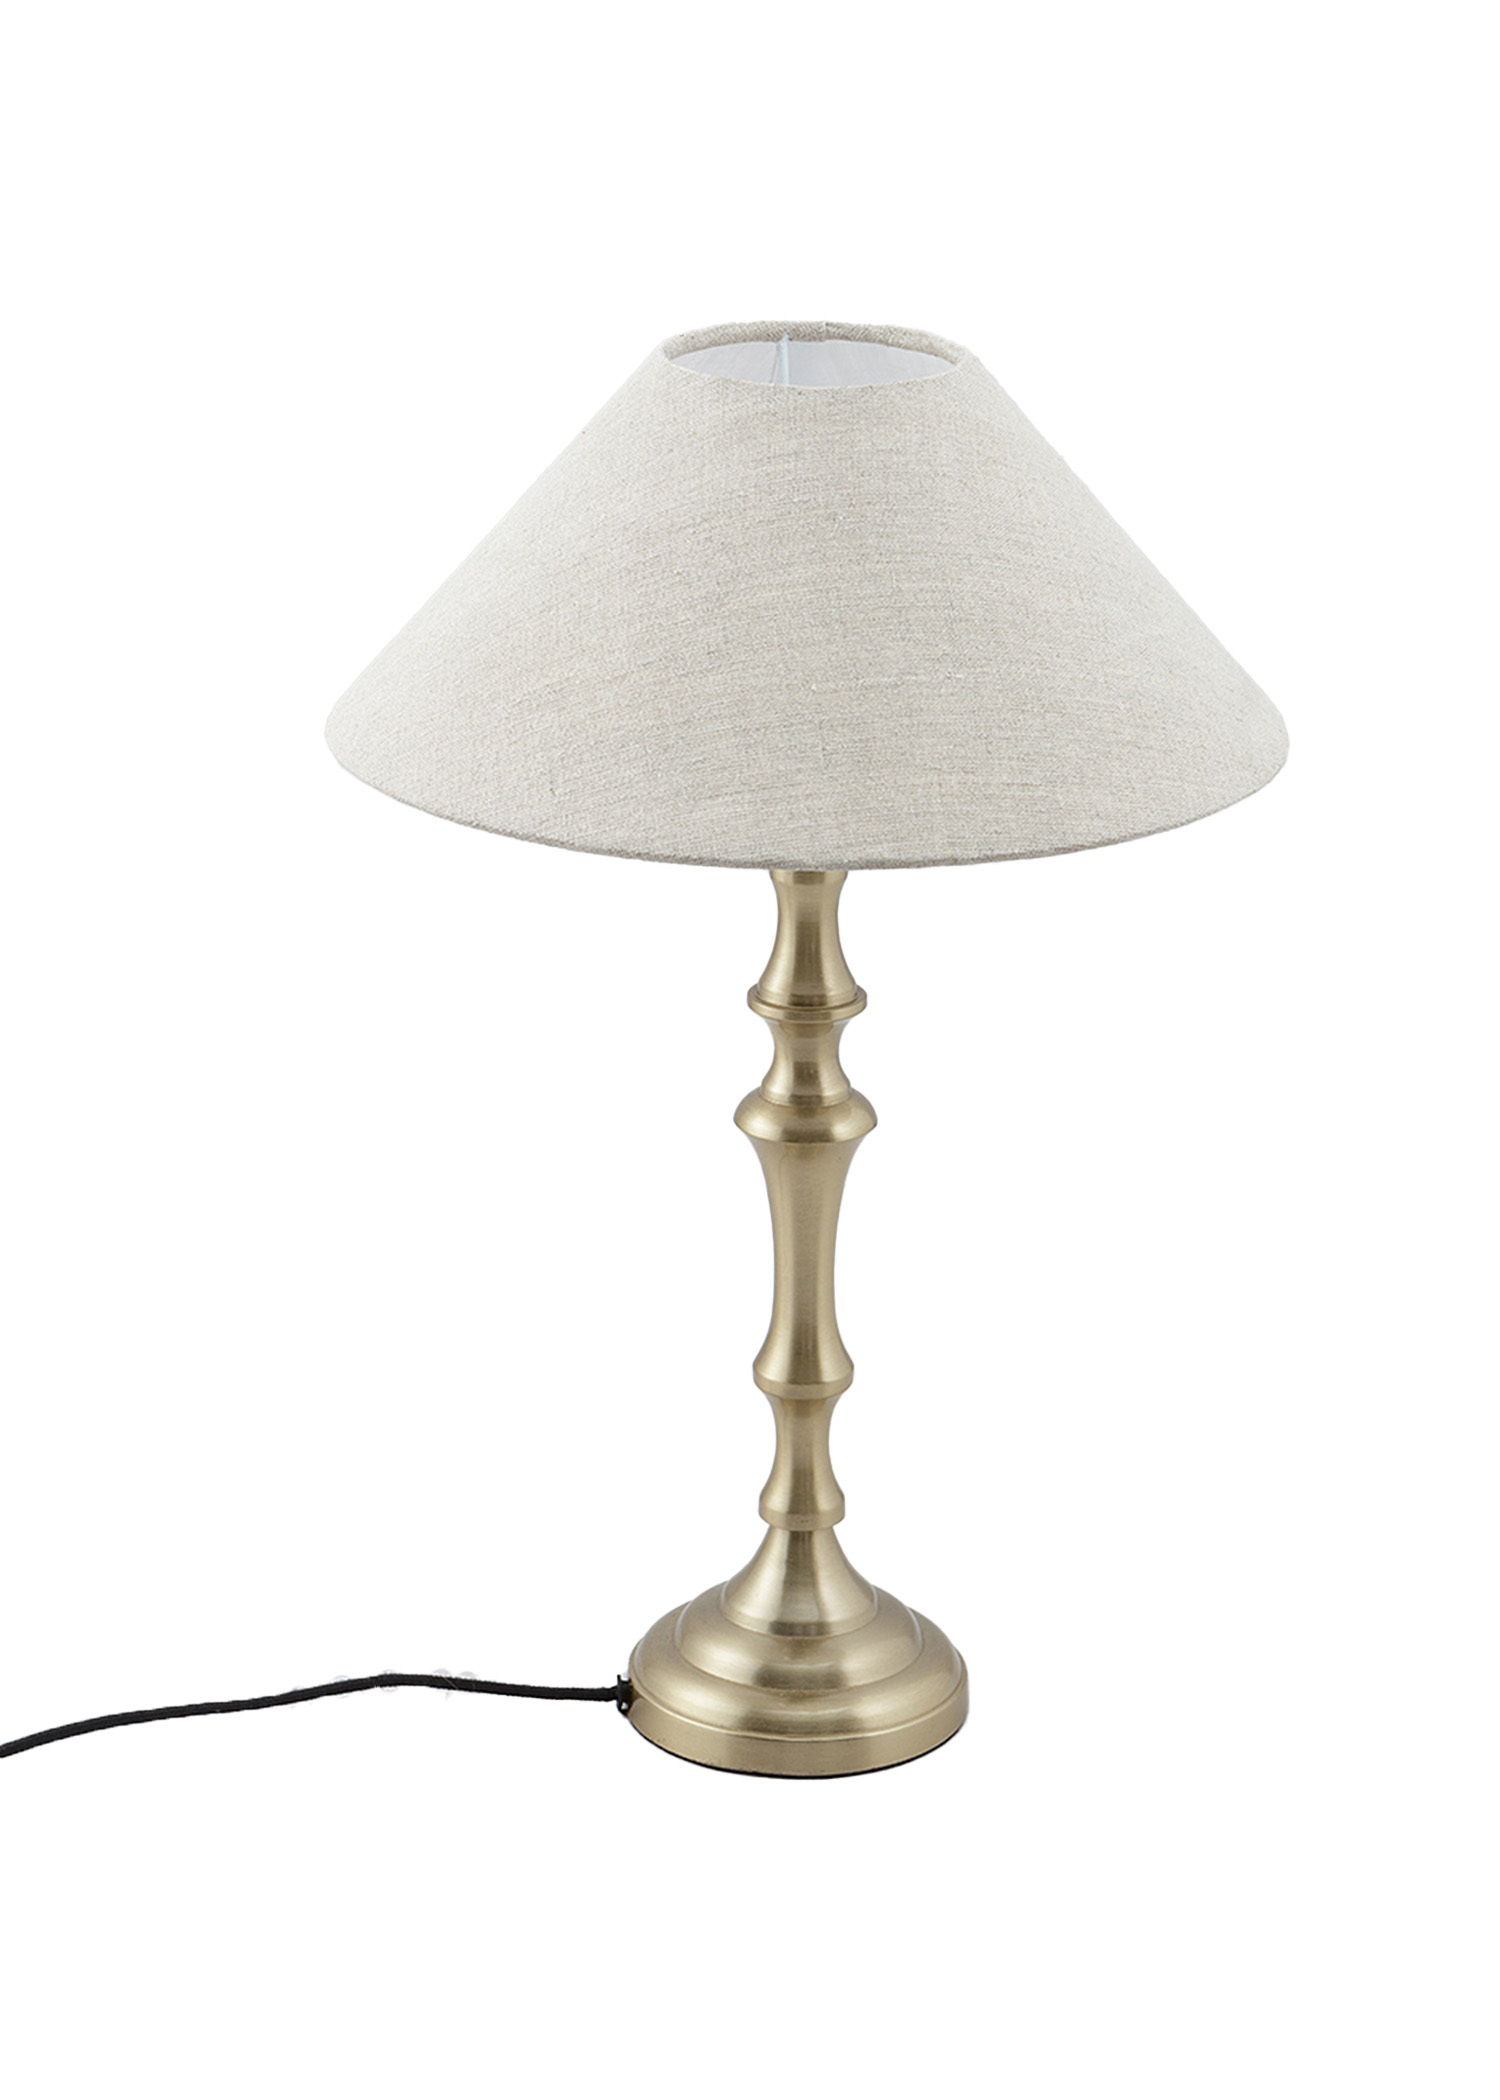 White cotton lampshade